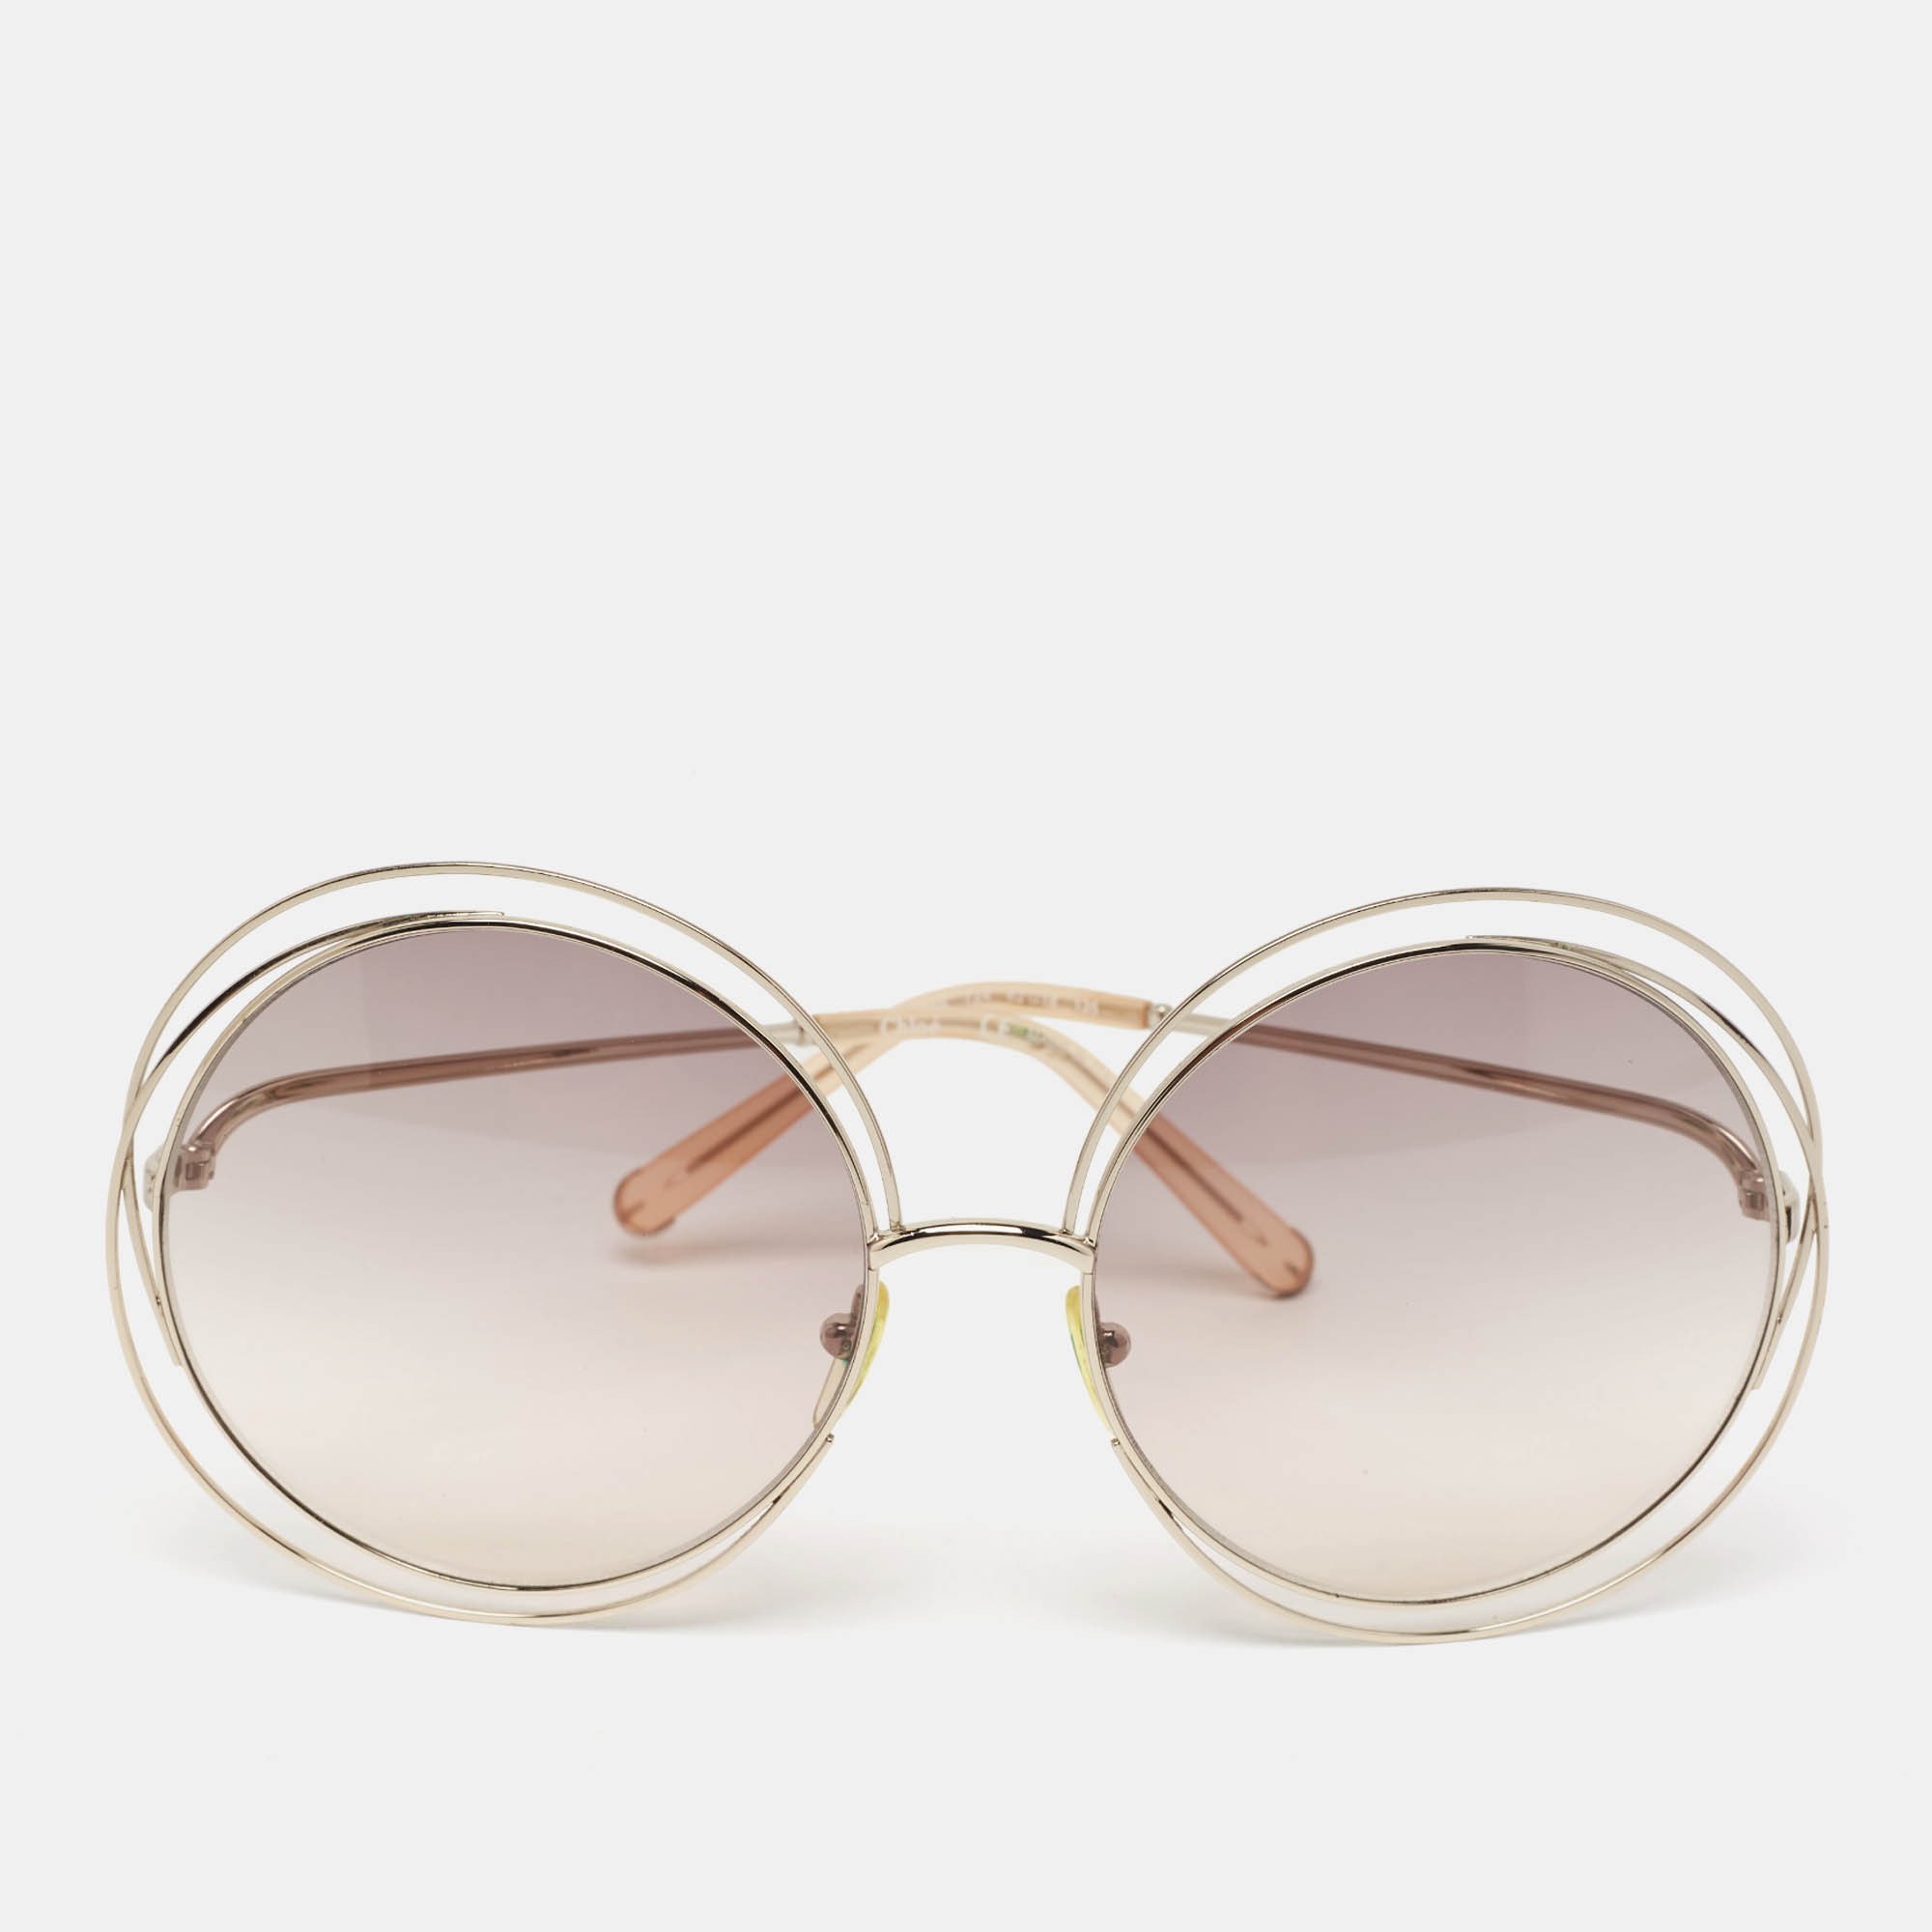 Chloe brown gradient ce114s frame round sunglasses